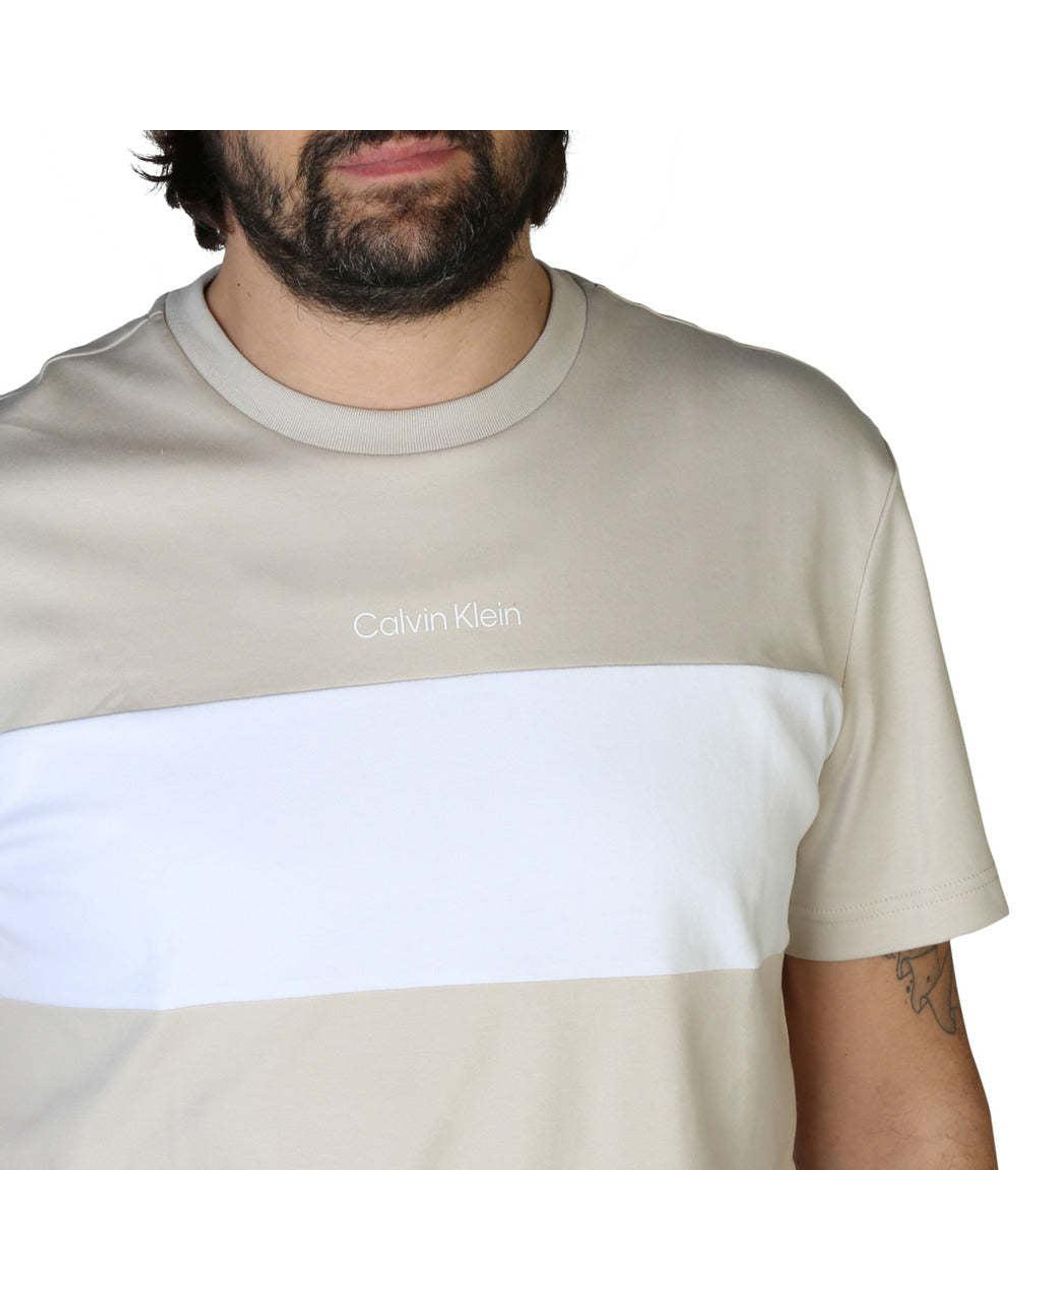 Calvin Klein Cotton T-shirts in Brown for Men - Save 21% | Lyst